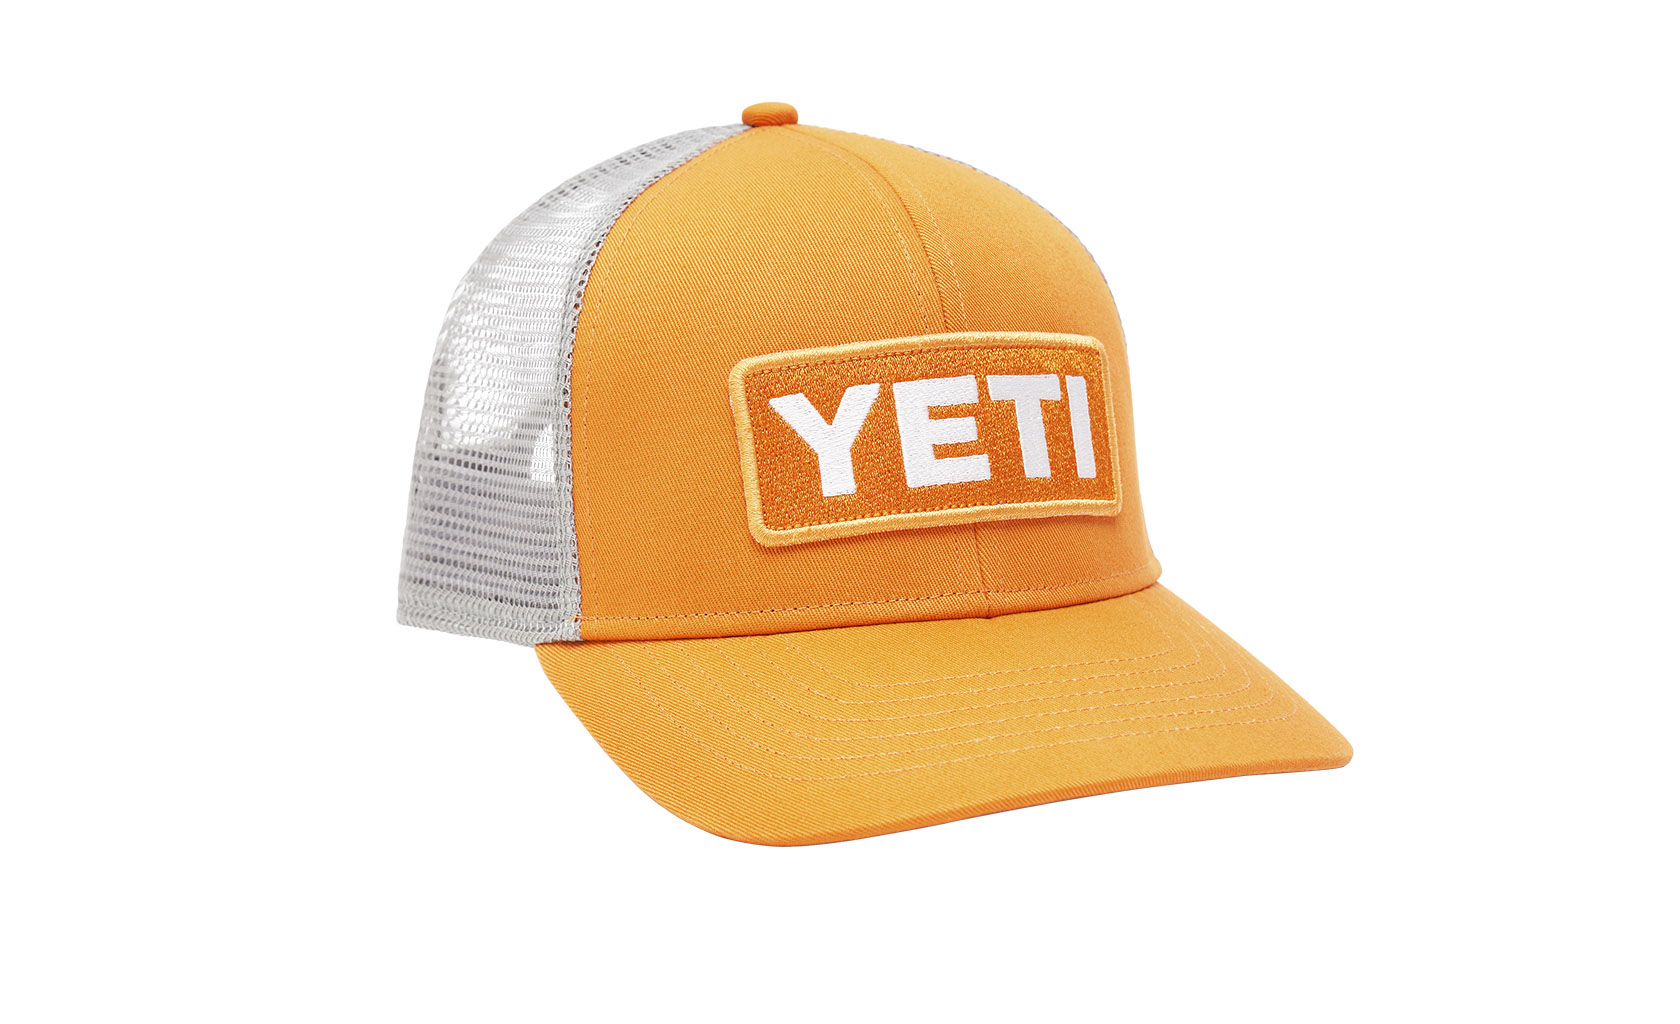 YETI / Mid-Pro Logo Badge Trucker Hat - King Crab Orange / White